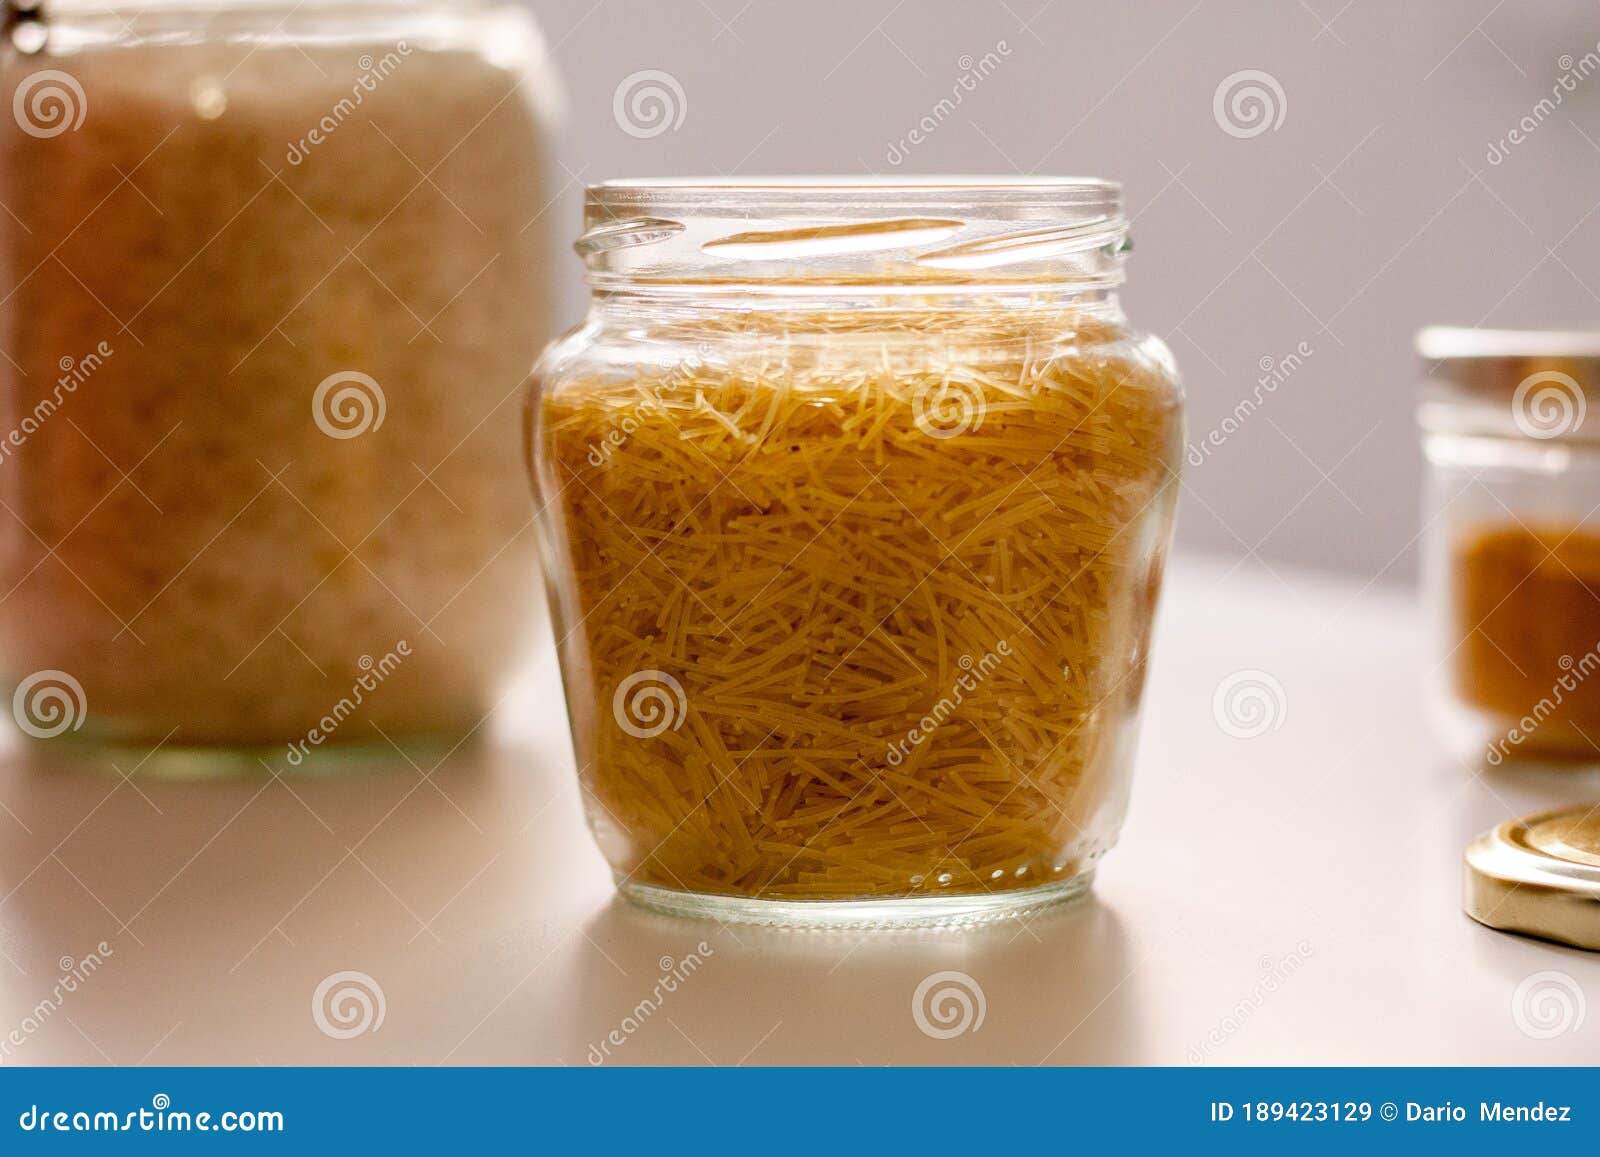 short noodles storage jar zero waste, noodle jar, cristal recycling cabello de angel.